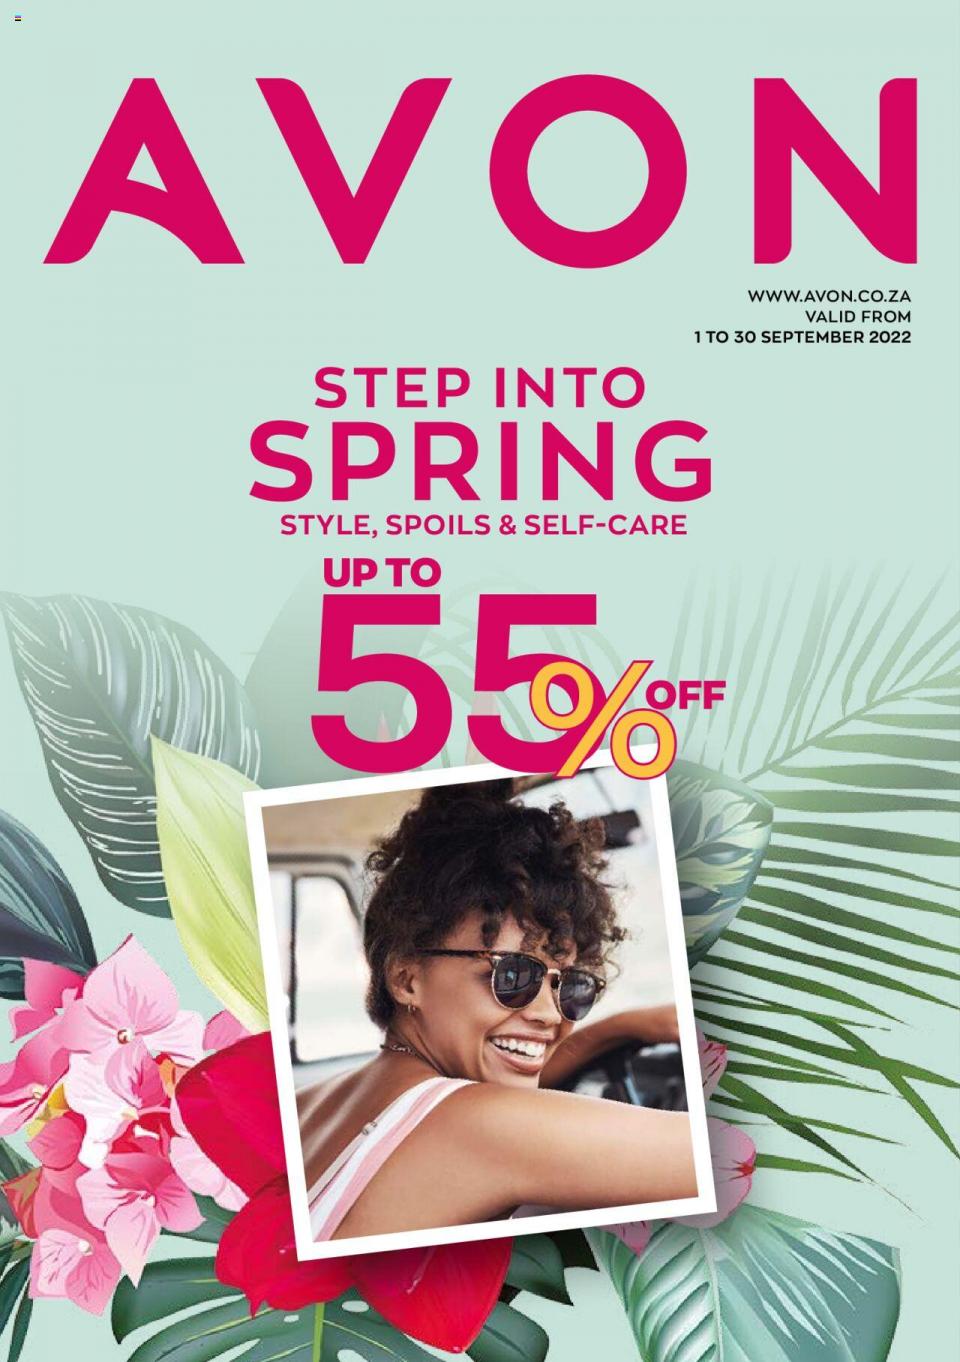 AVON Brochure Step into Spring 2022 Avon South Africa Avon Specials